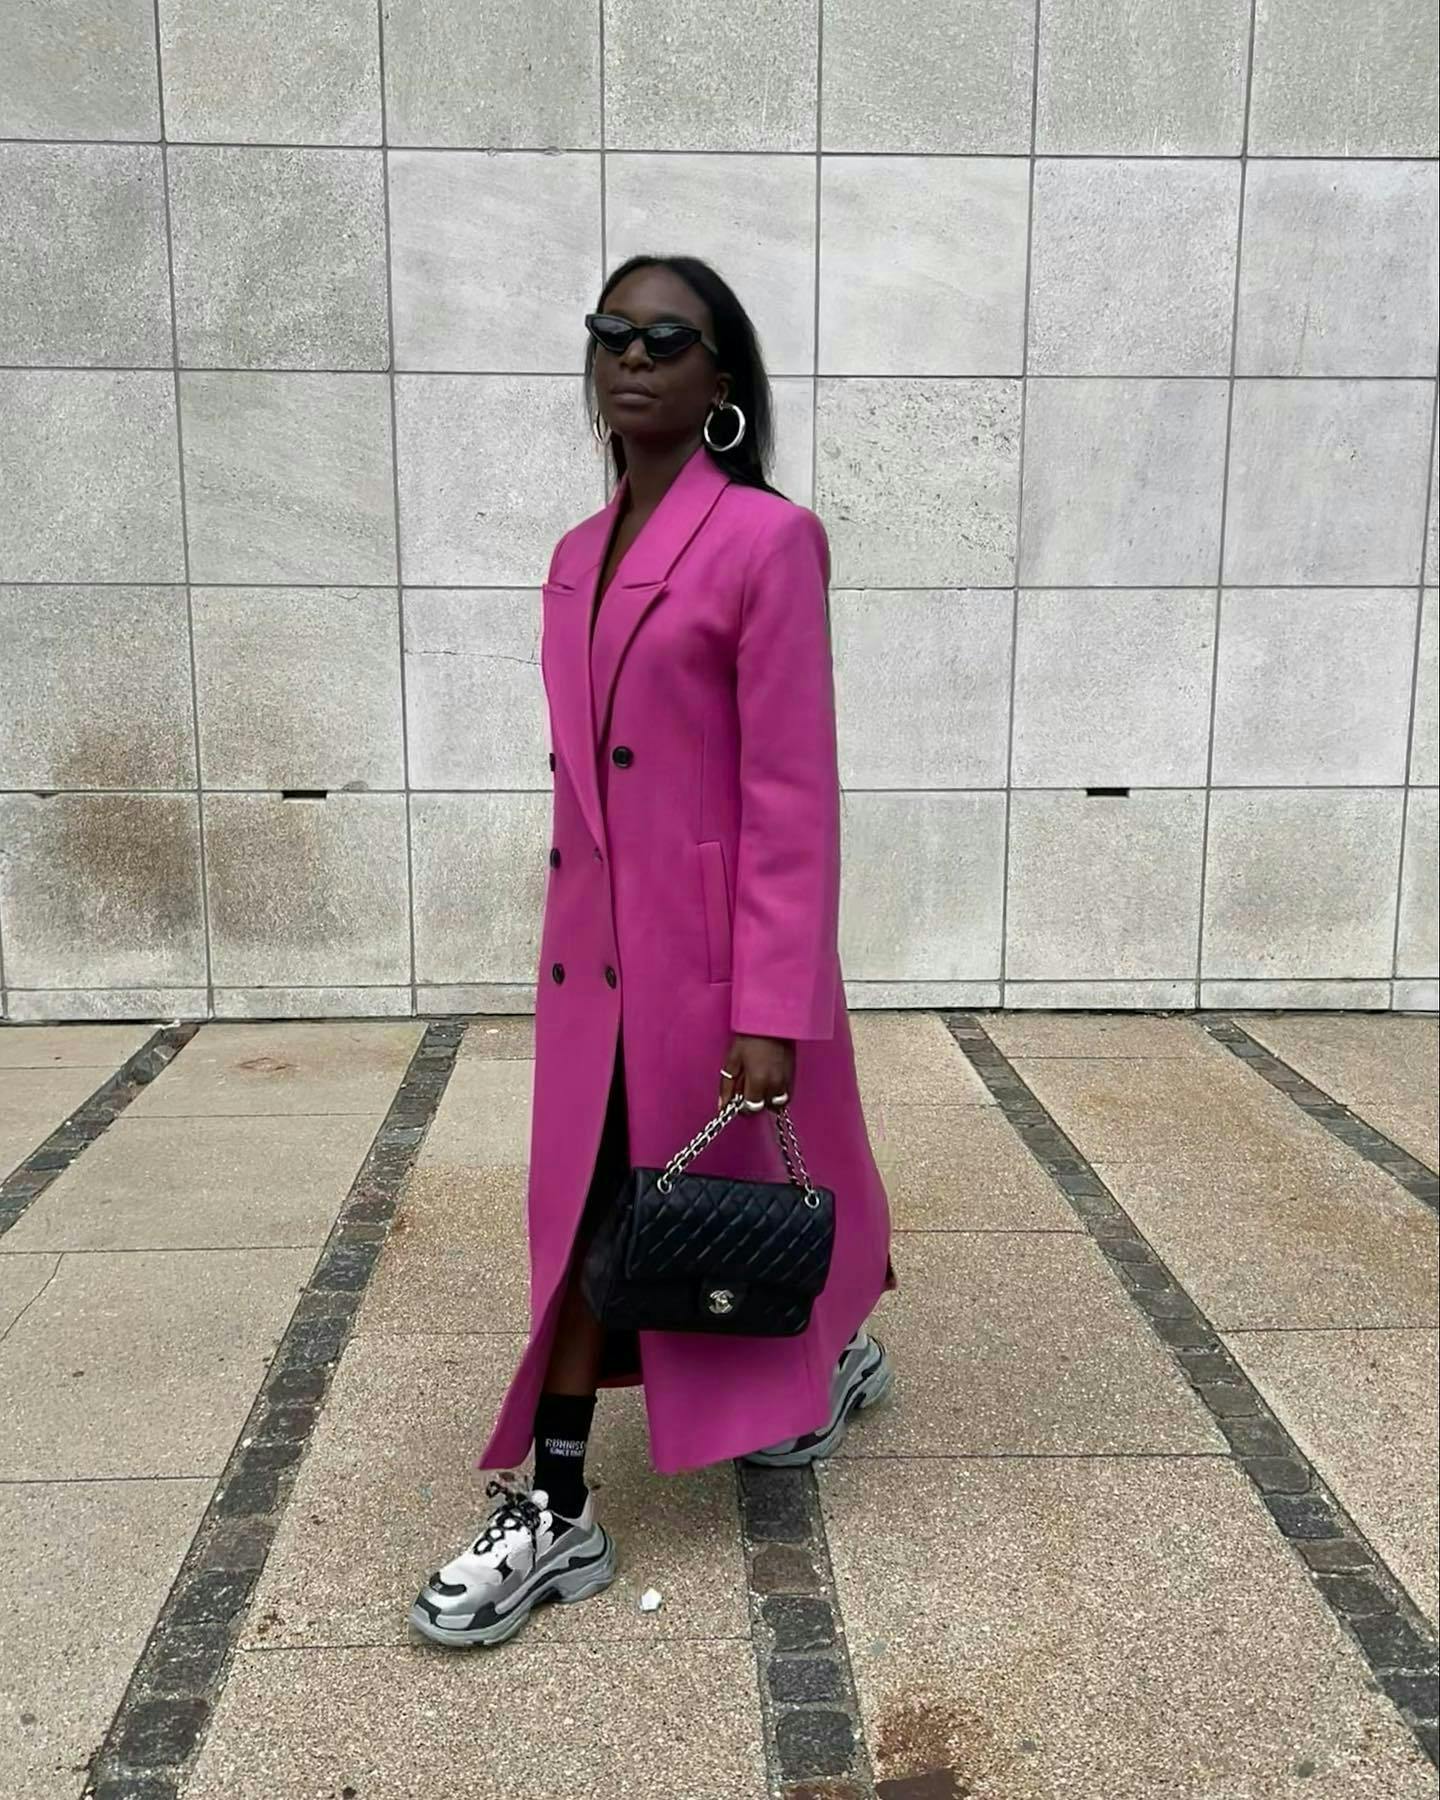 clothing apparel coat person human sunglasses accessories overcoat shoe footwear